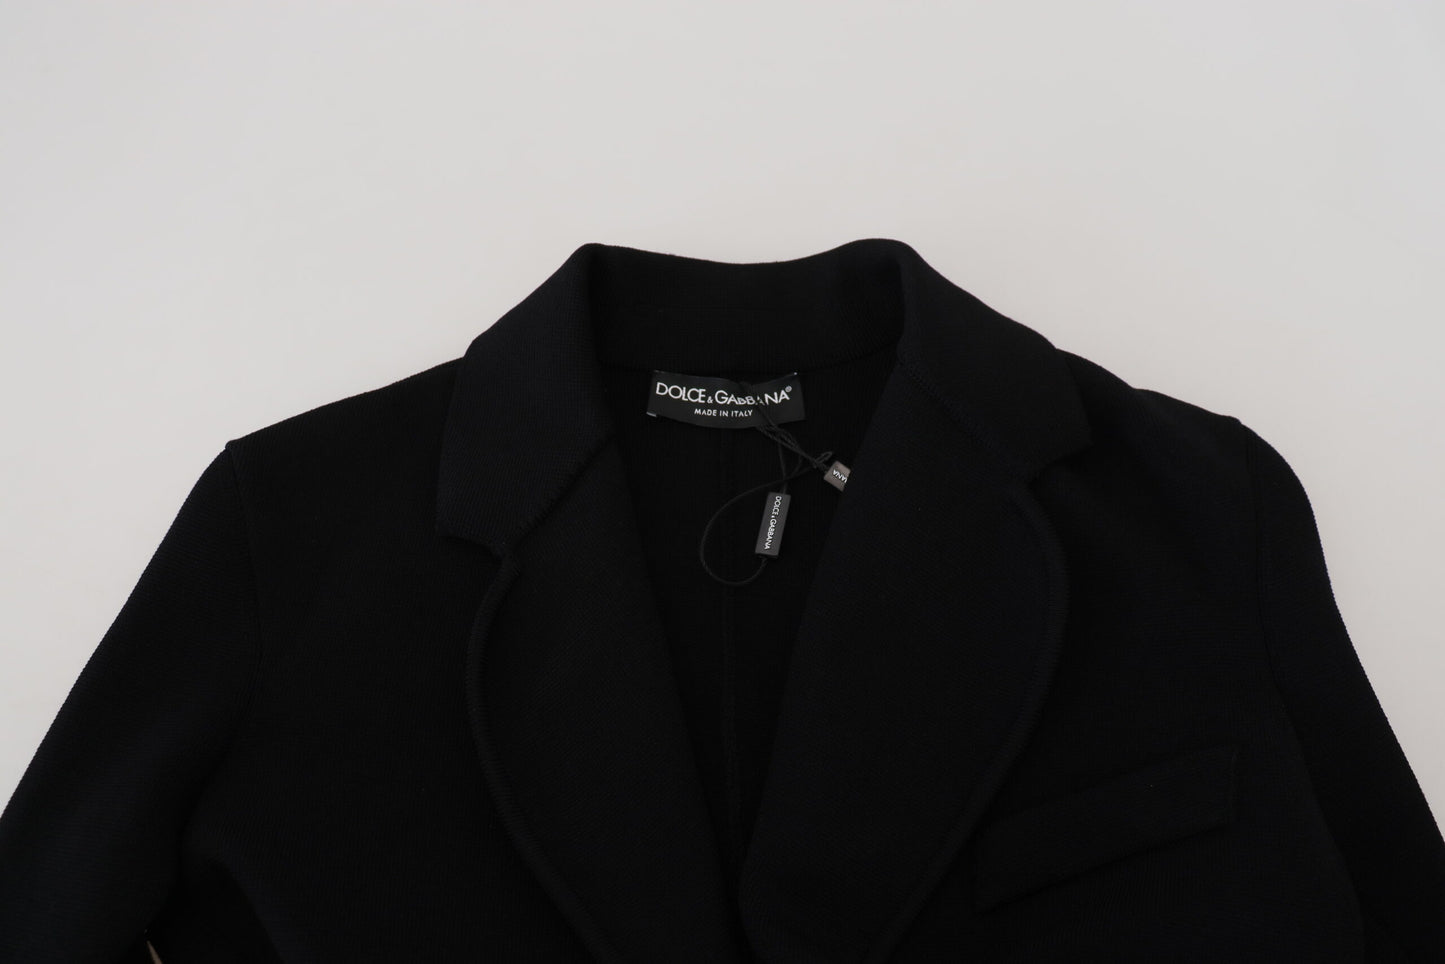 Dolce & Gabbana Elegant Black Long Sleeve Jacket